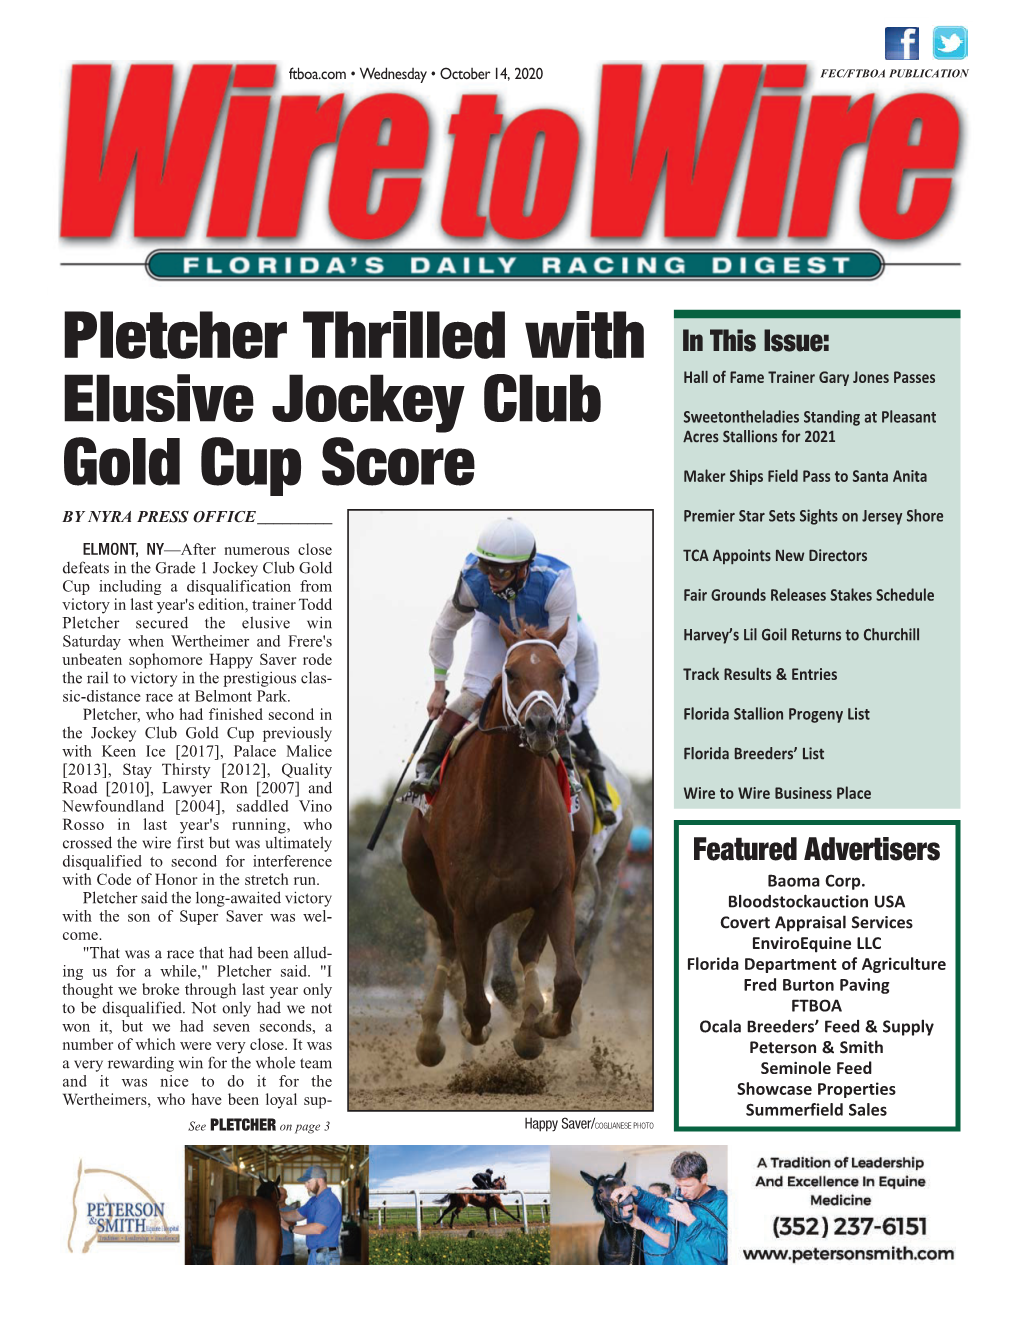 Pletcher Thrilled with Elusive Jockey Club Gold Cup Score